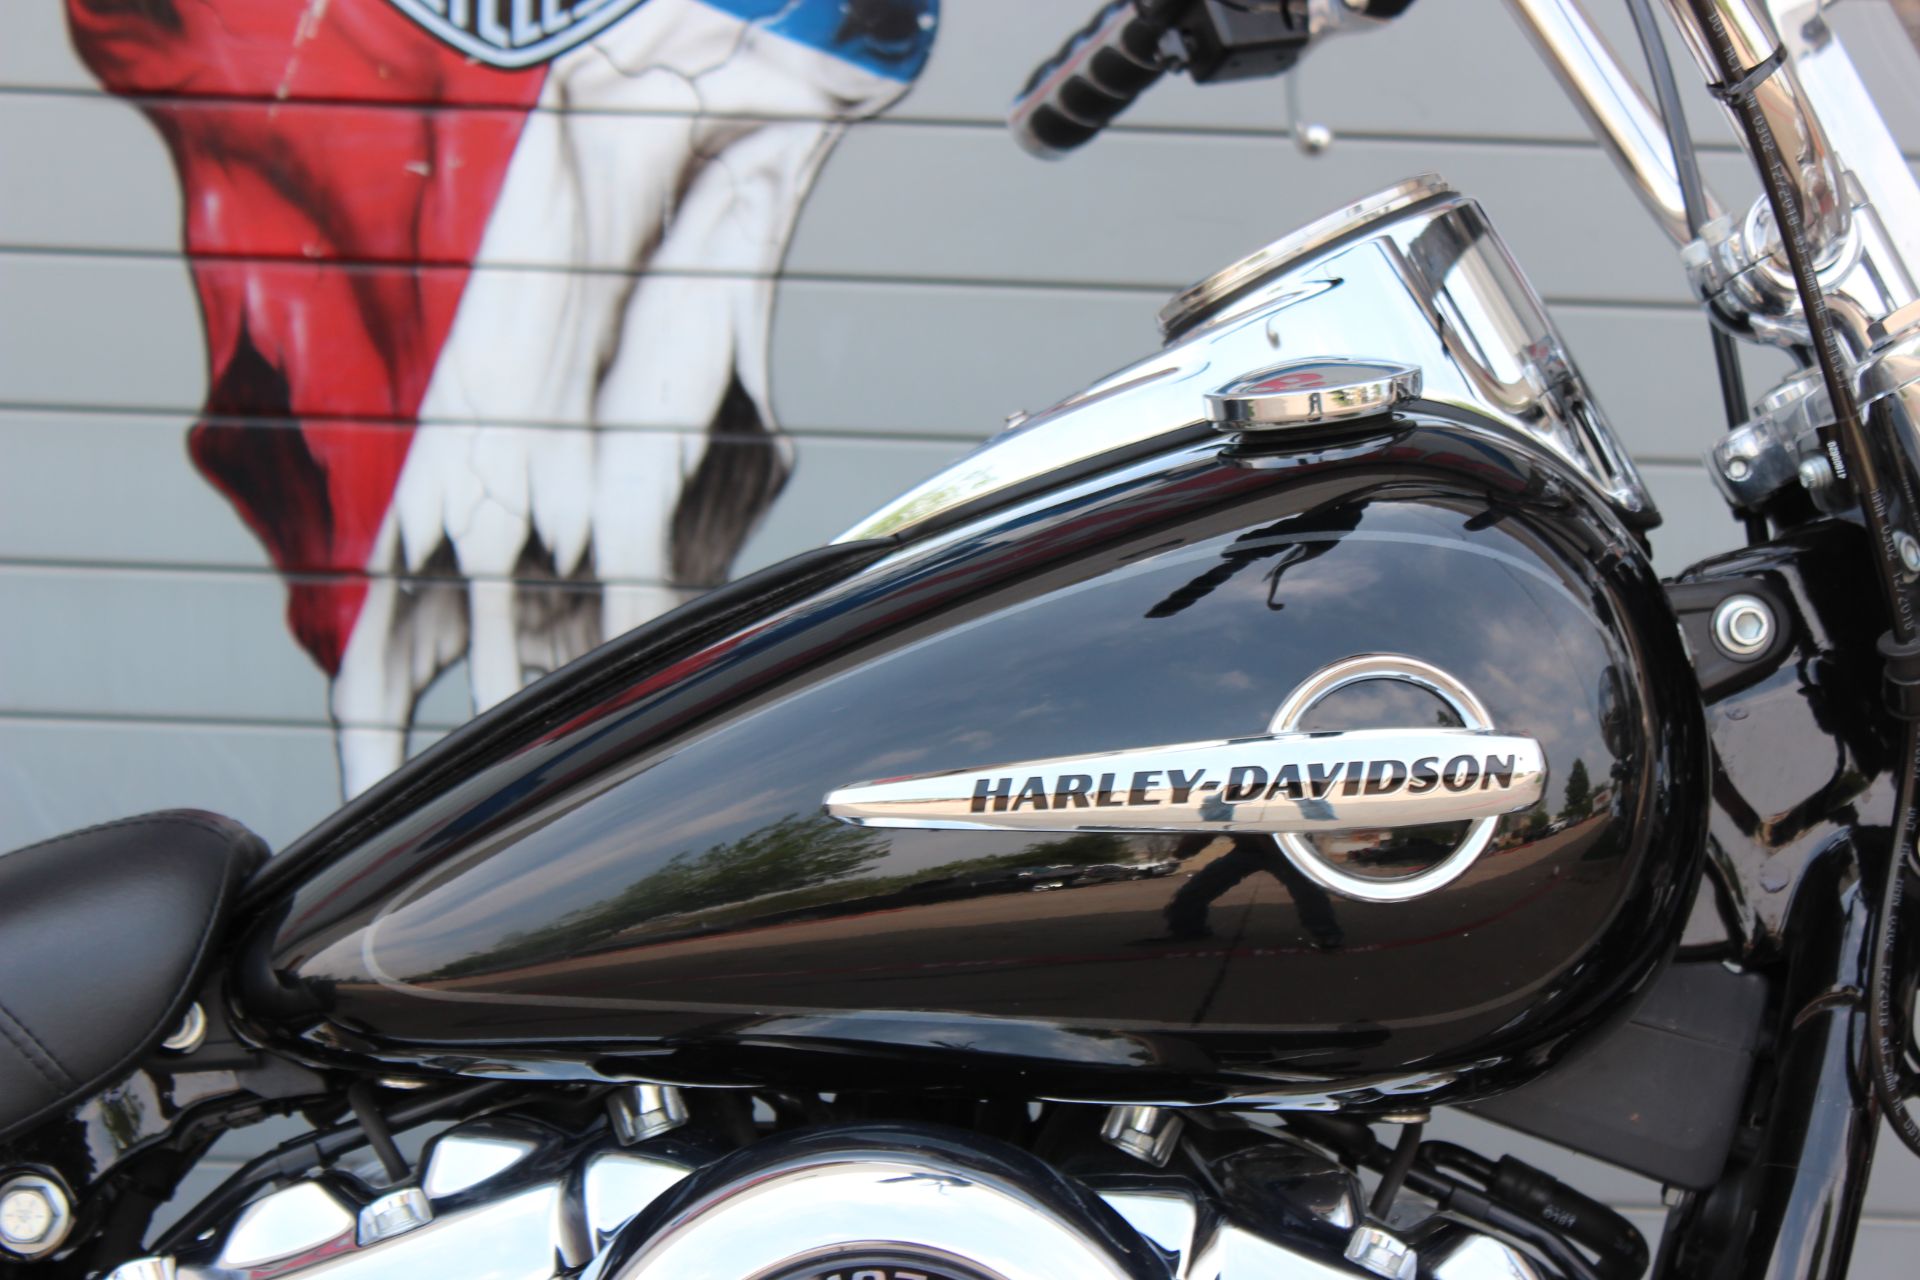 2020 Harley-Davidson Heritage Classic in Grand Prairie, Texas - Photo 6